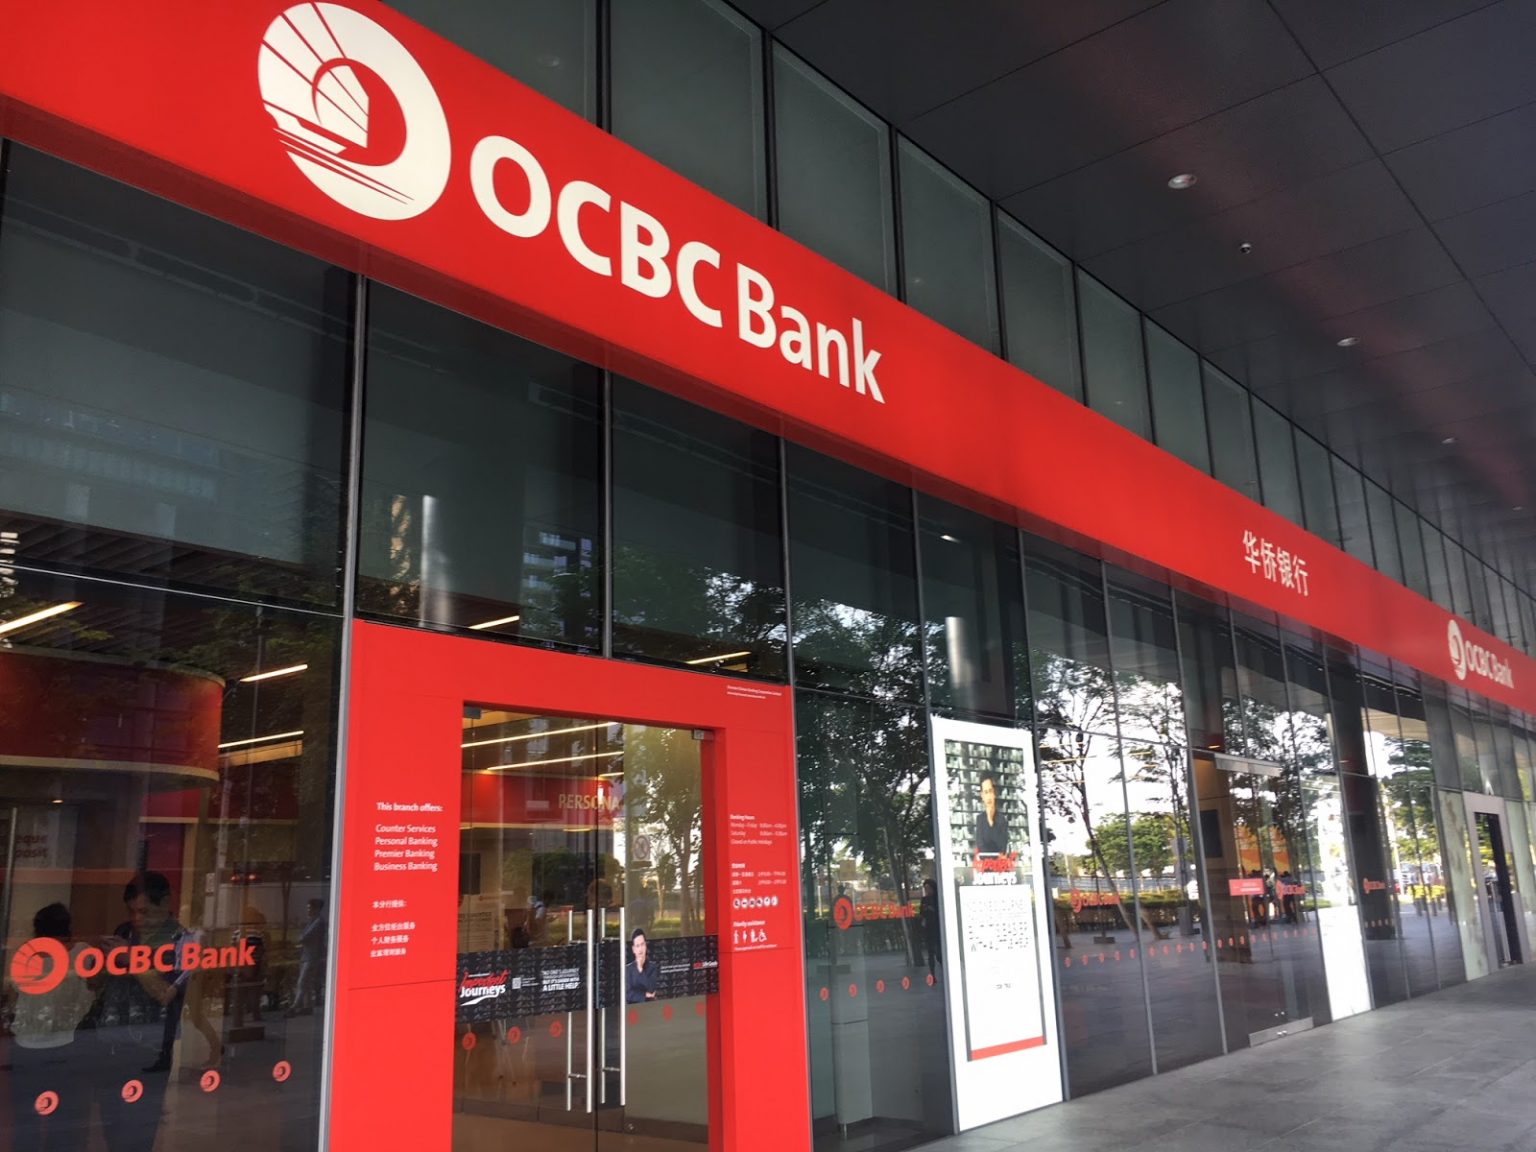 ocbc bank interest rate fixed deposit malaysia